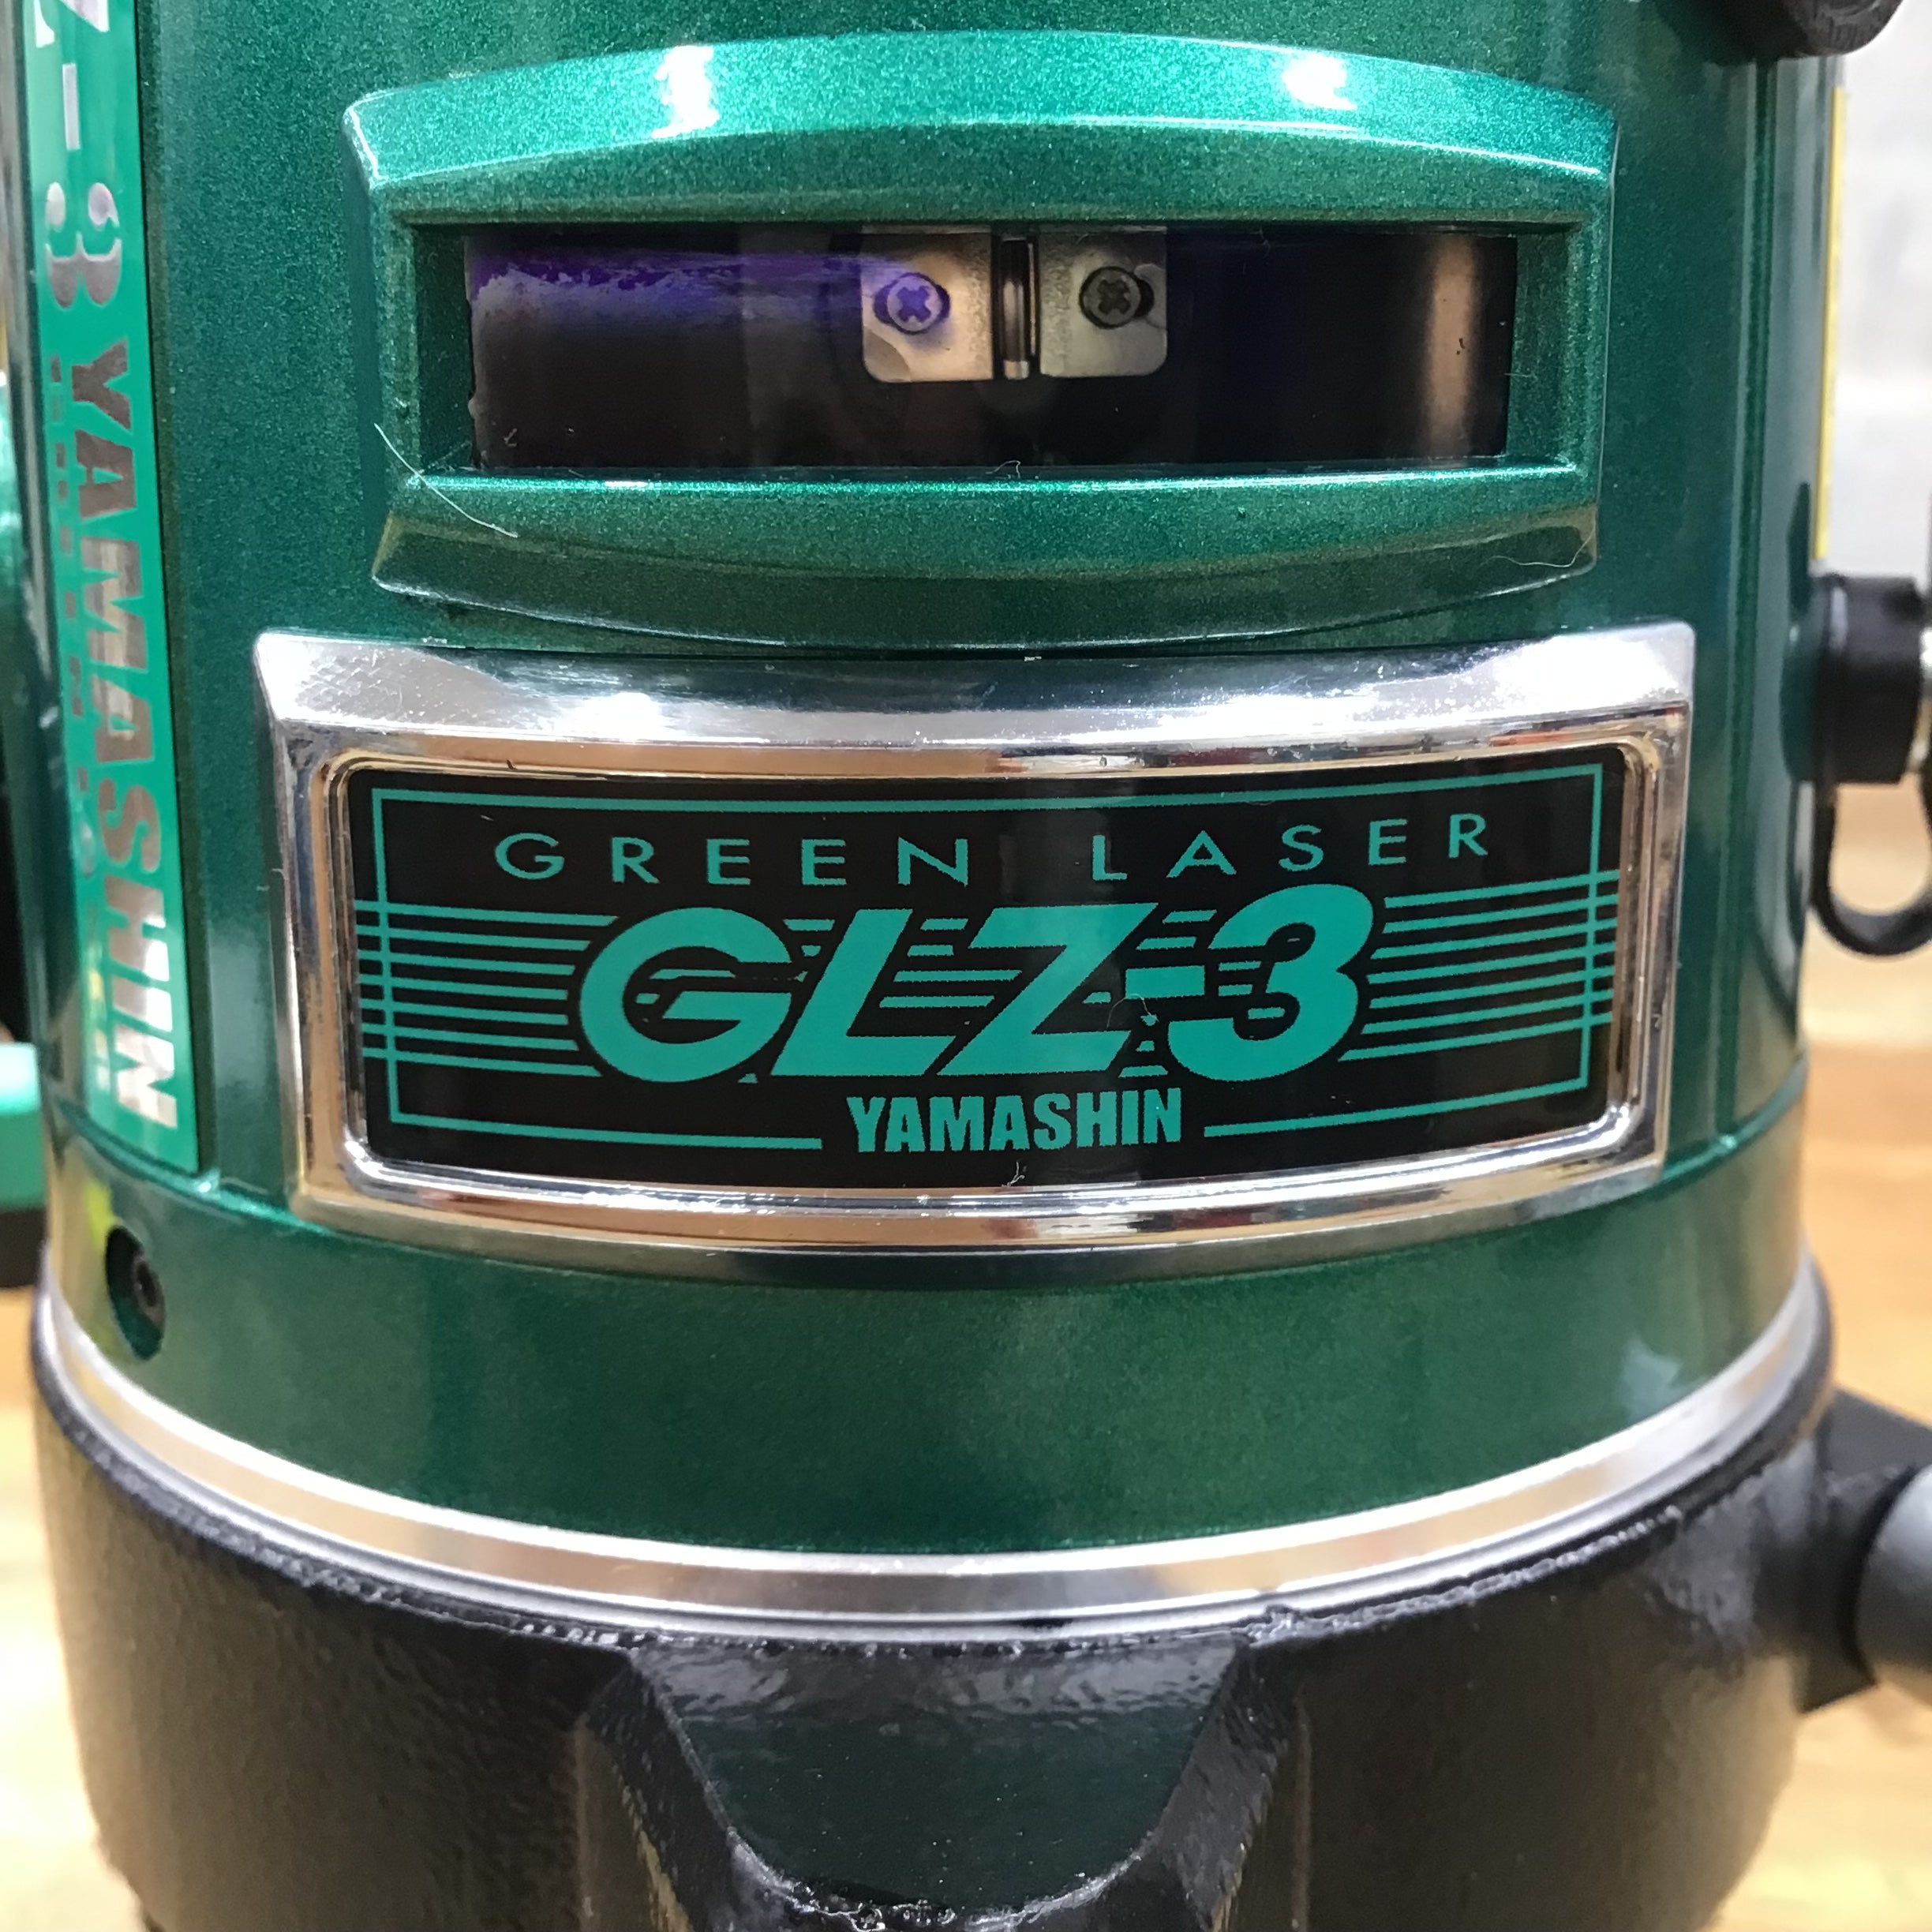 YAMASHIN/ヤマシン グリーンレーザー墨出し器 GLZ-3 受光器(BBR-GLZ